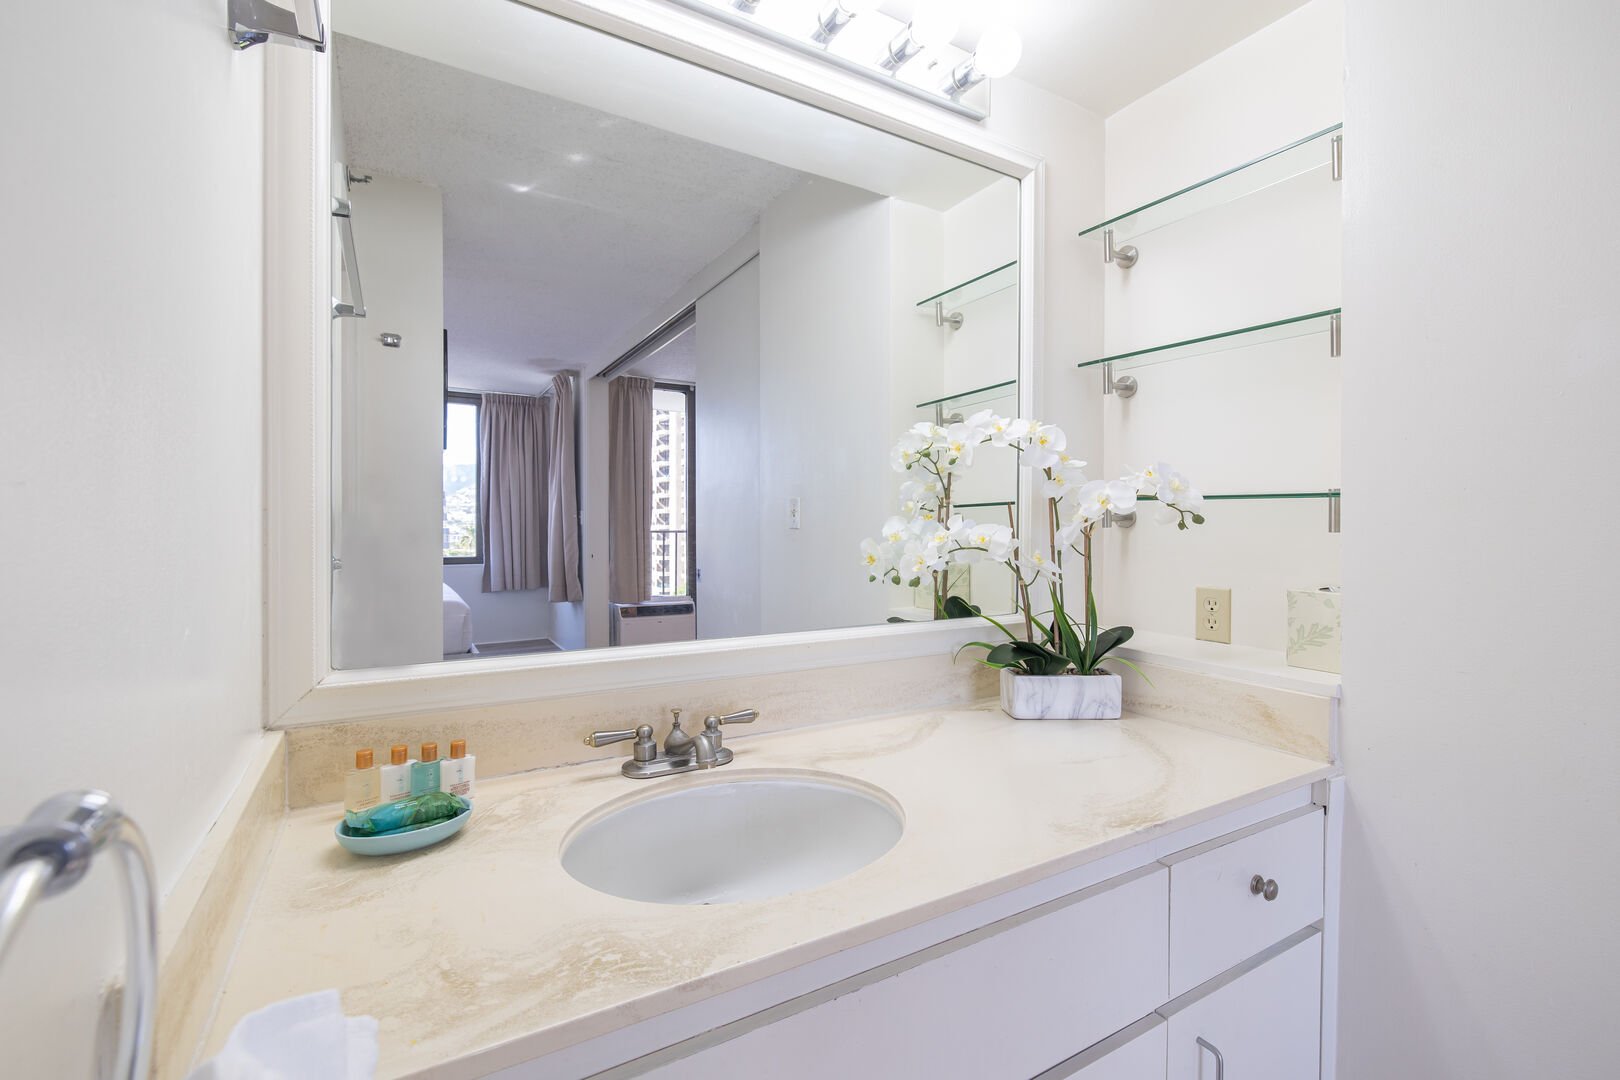 Bathroom - vanity with cabinet